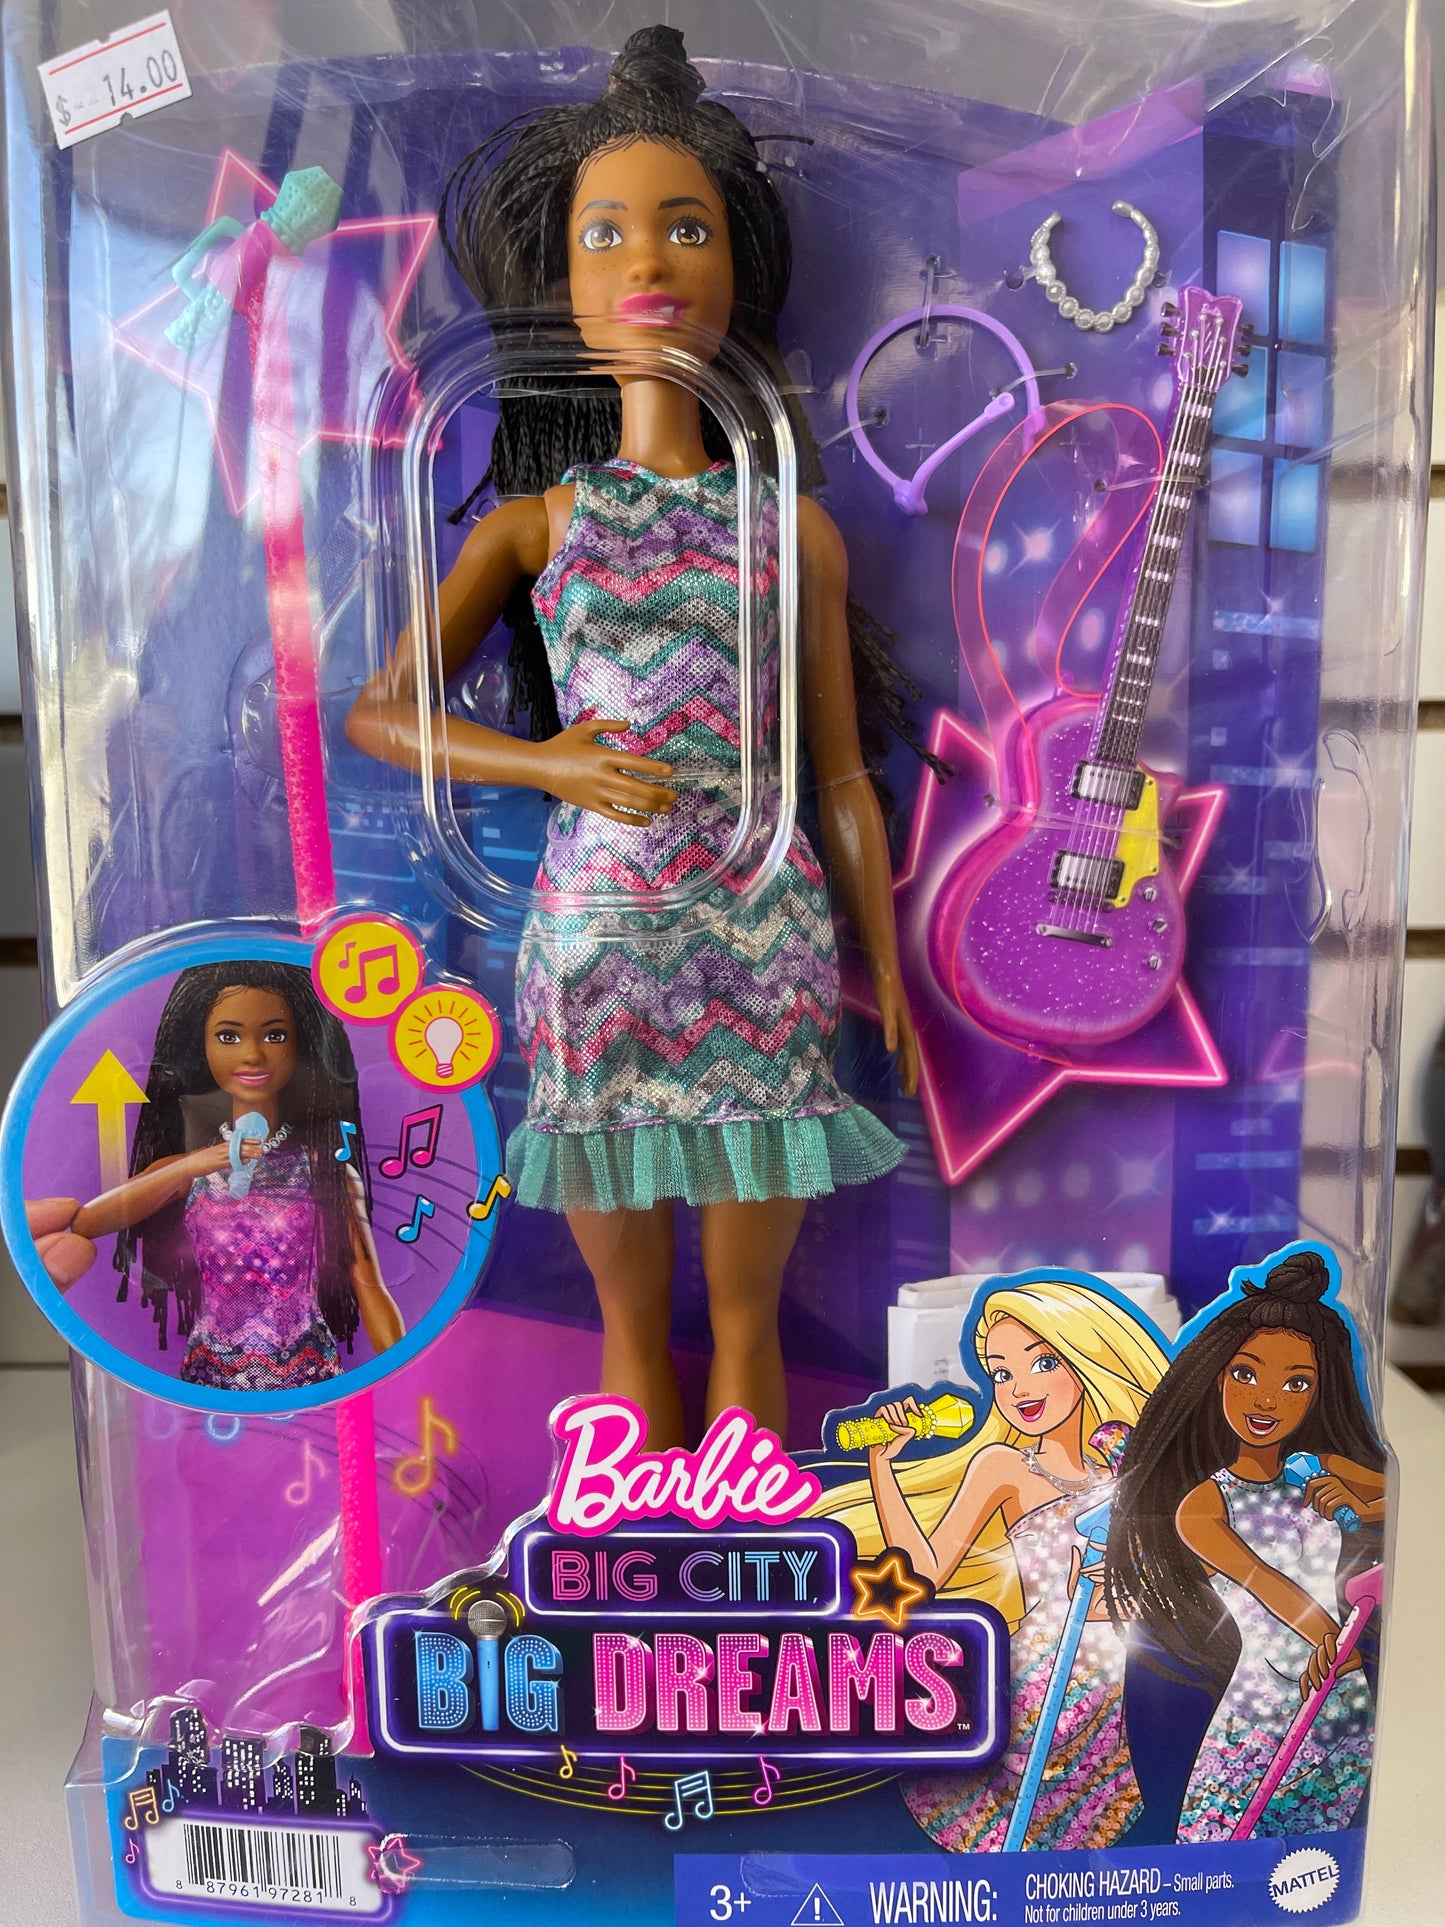 Barbie Big City Dreams